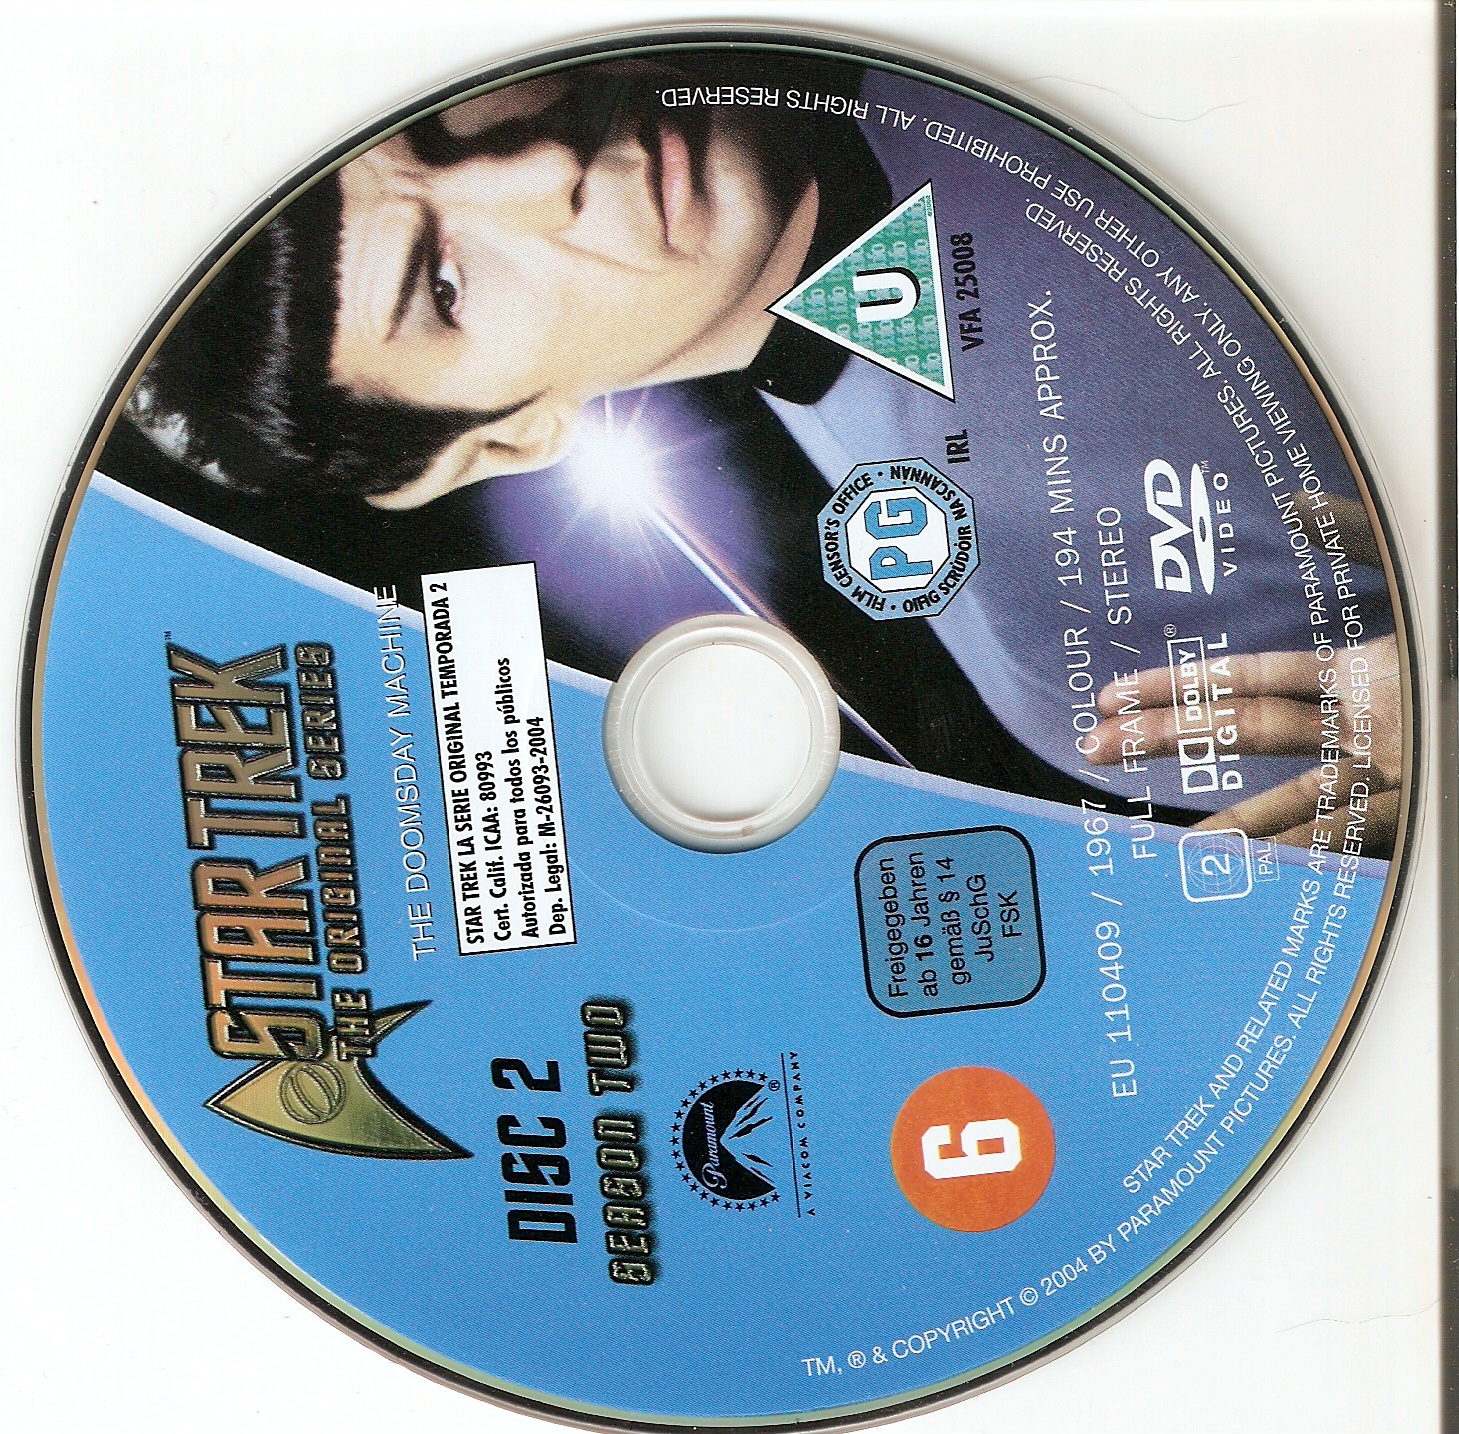 Star trek saison 2 DVD 2